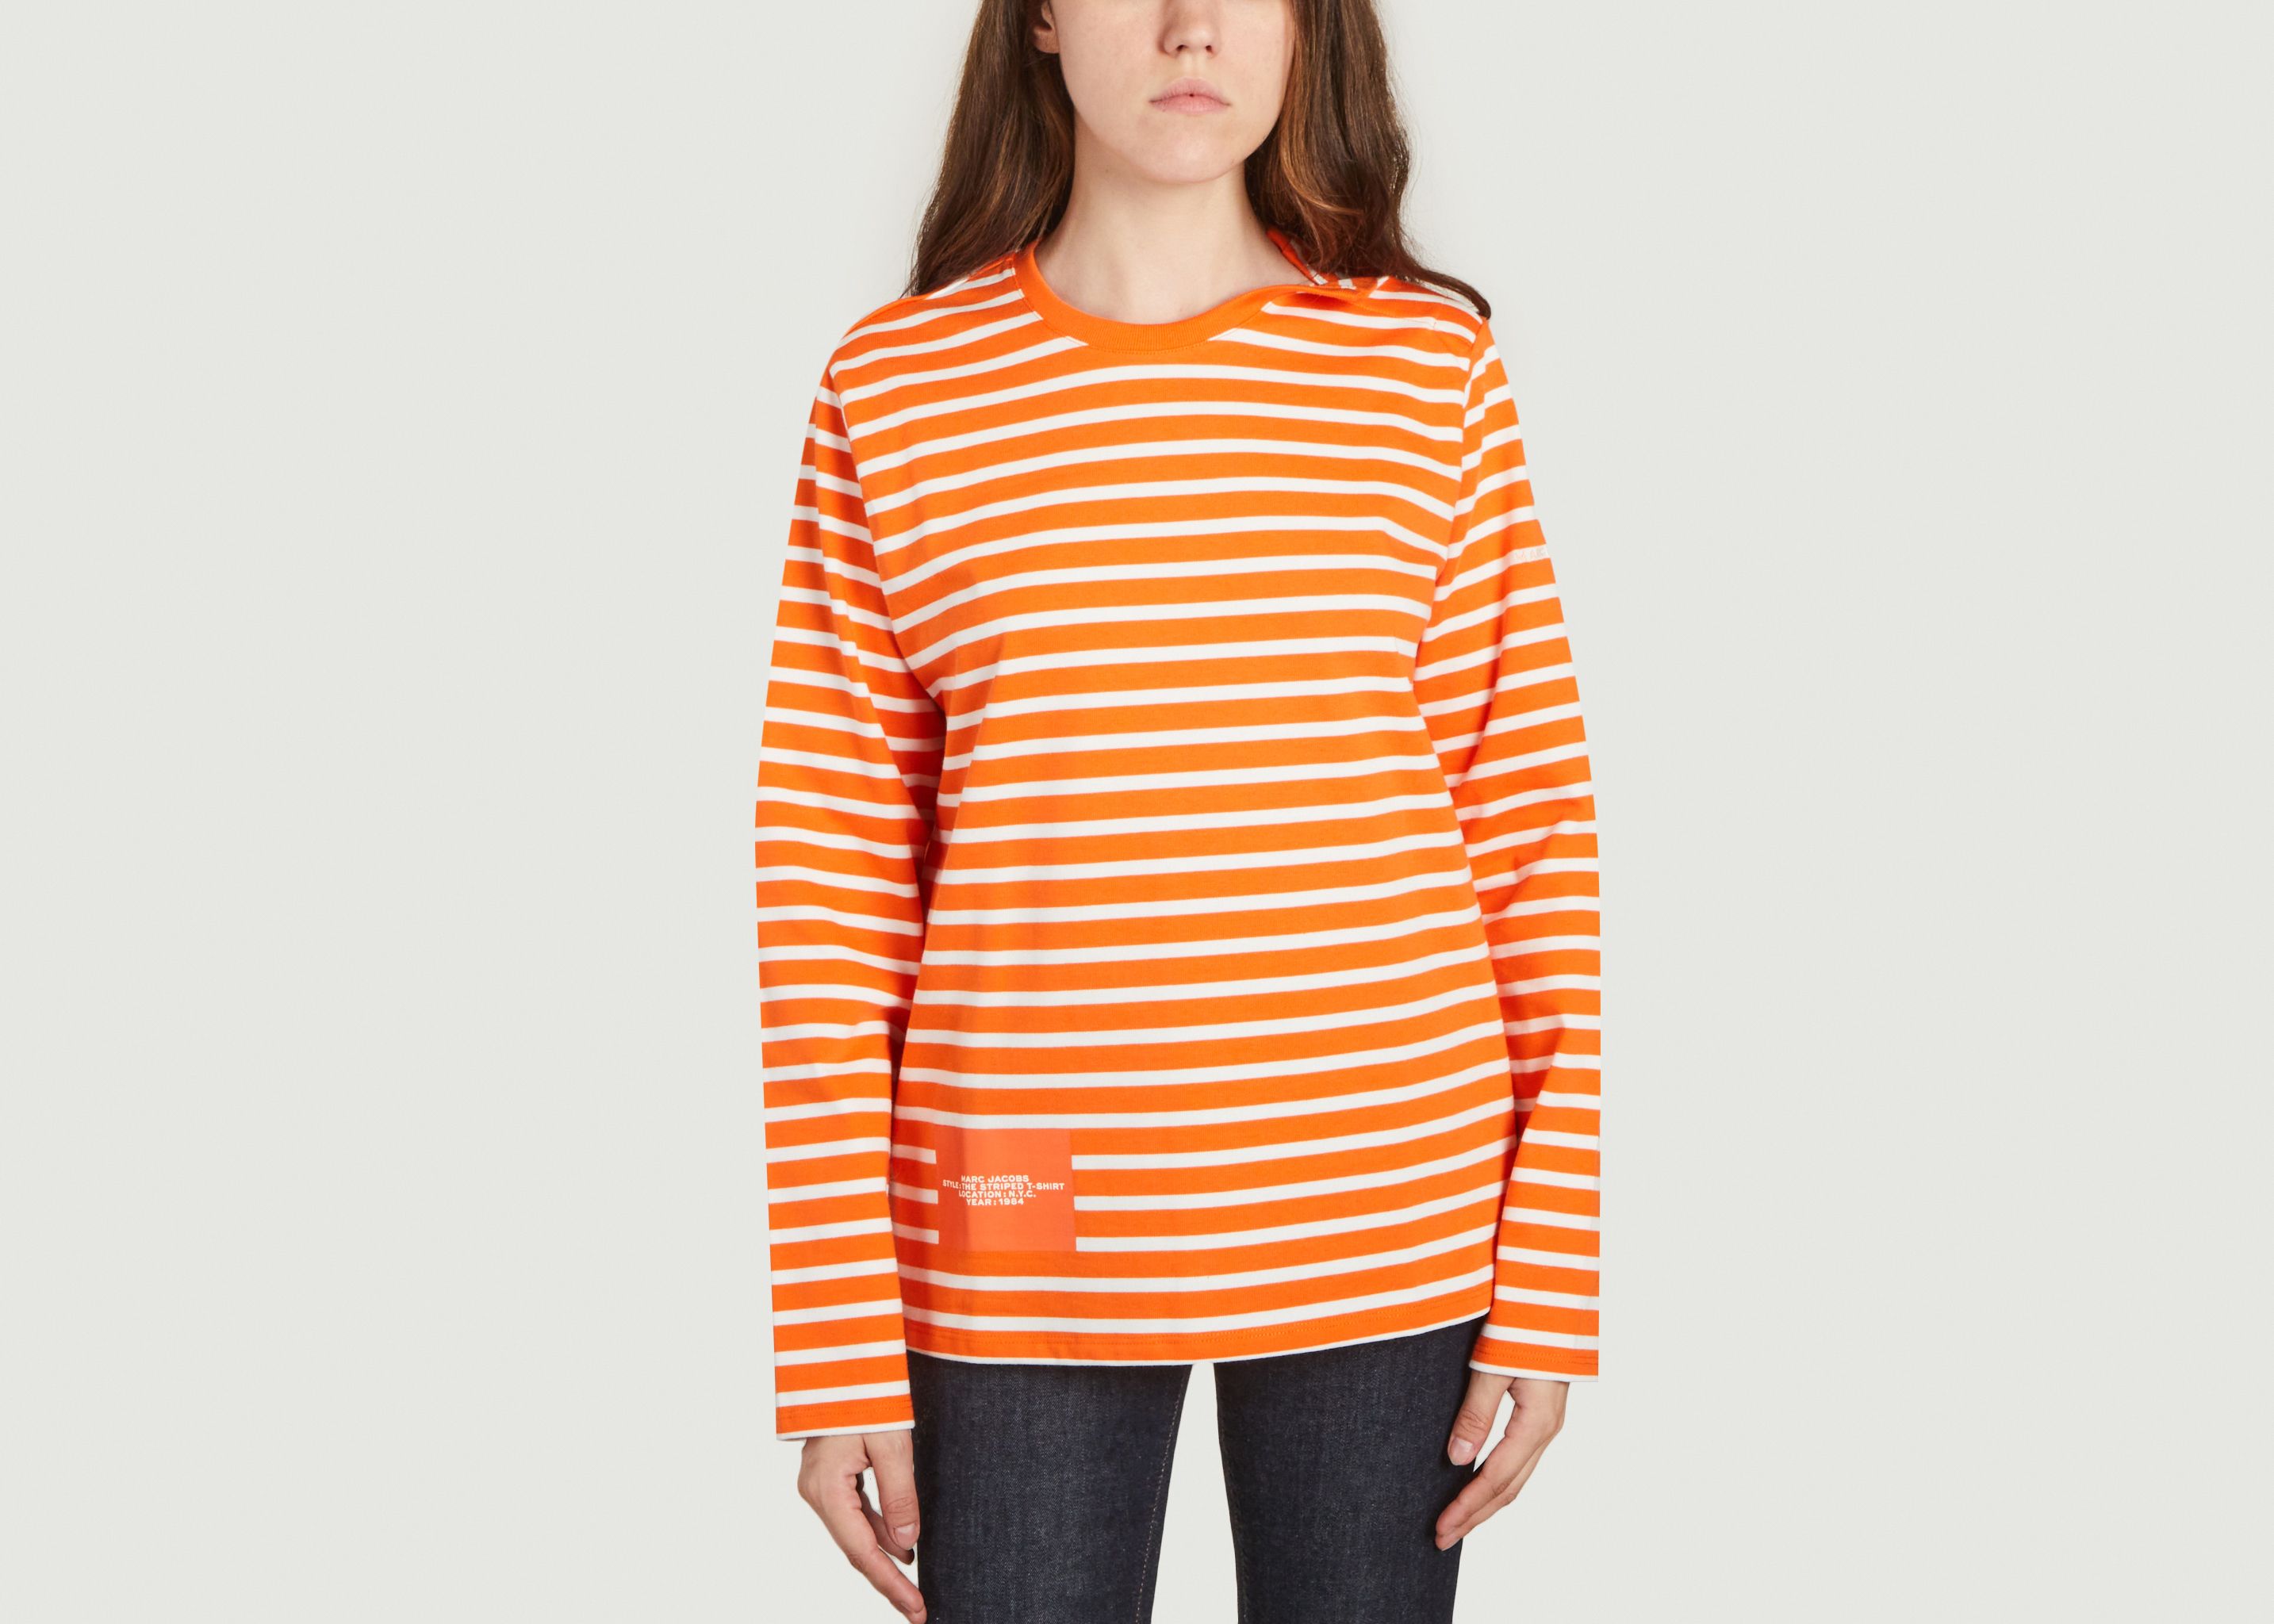 The striped cotton t-shirt - Marc Jacobs